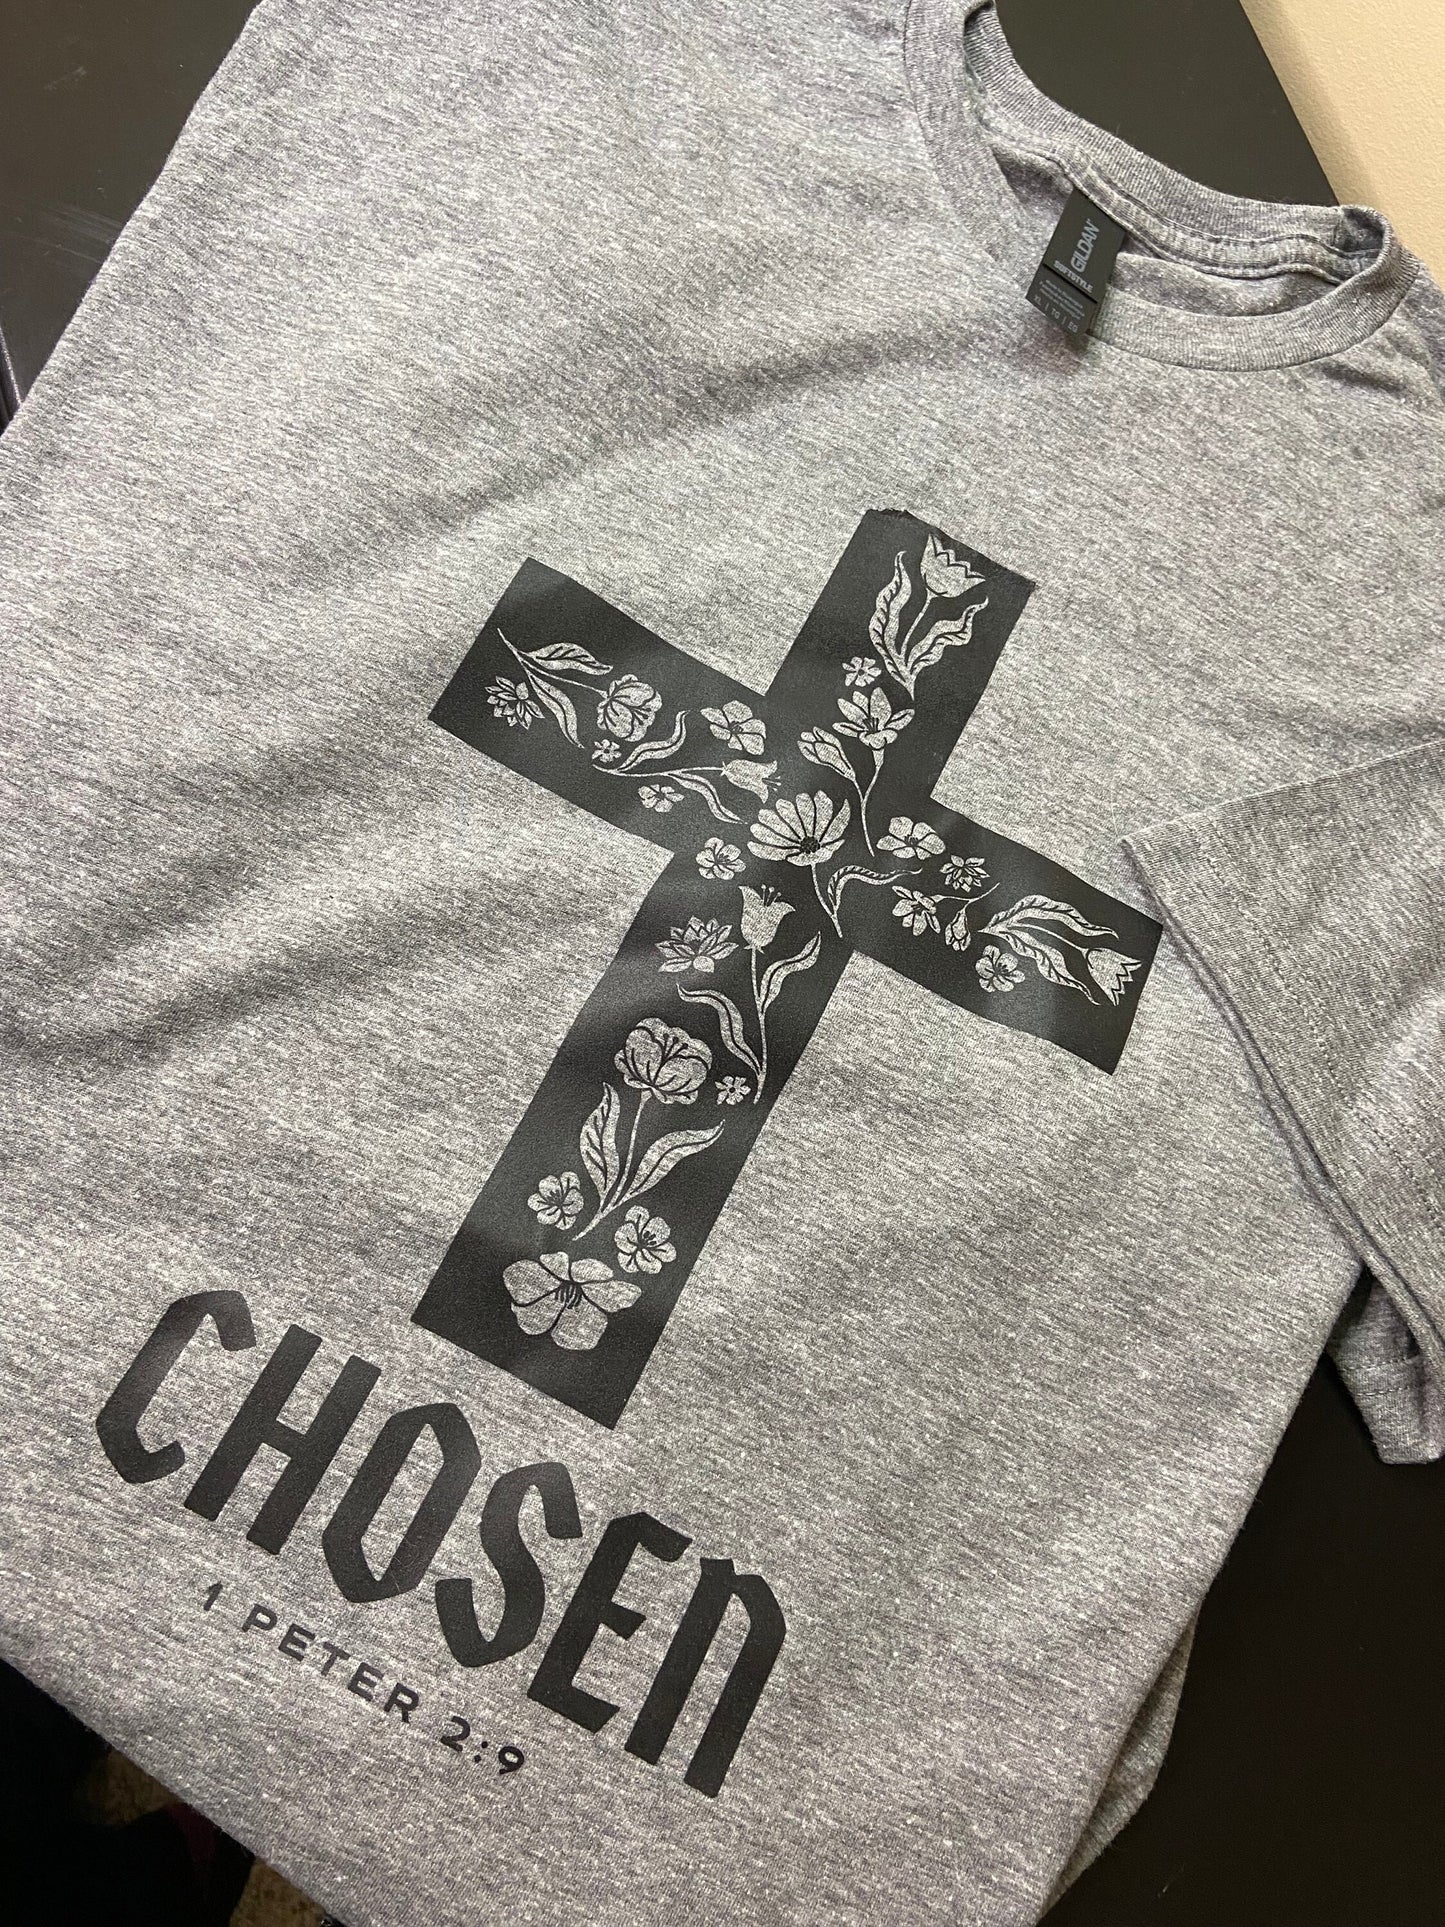 Chosen Shirt, Christian T-Shirt, Religious Gifts, Bible Verse Shirt, Motivational Christian Shirt, Love Jesus Tshirt